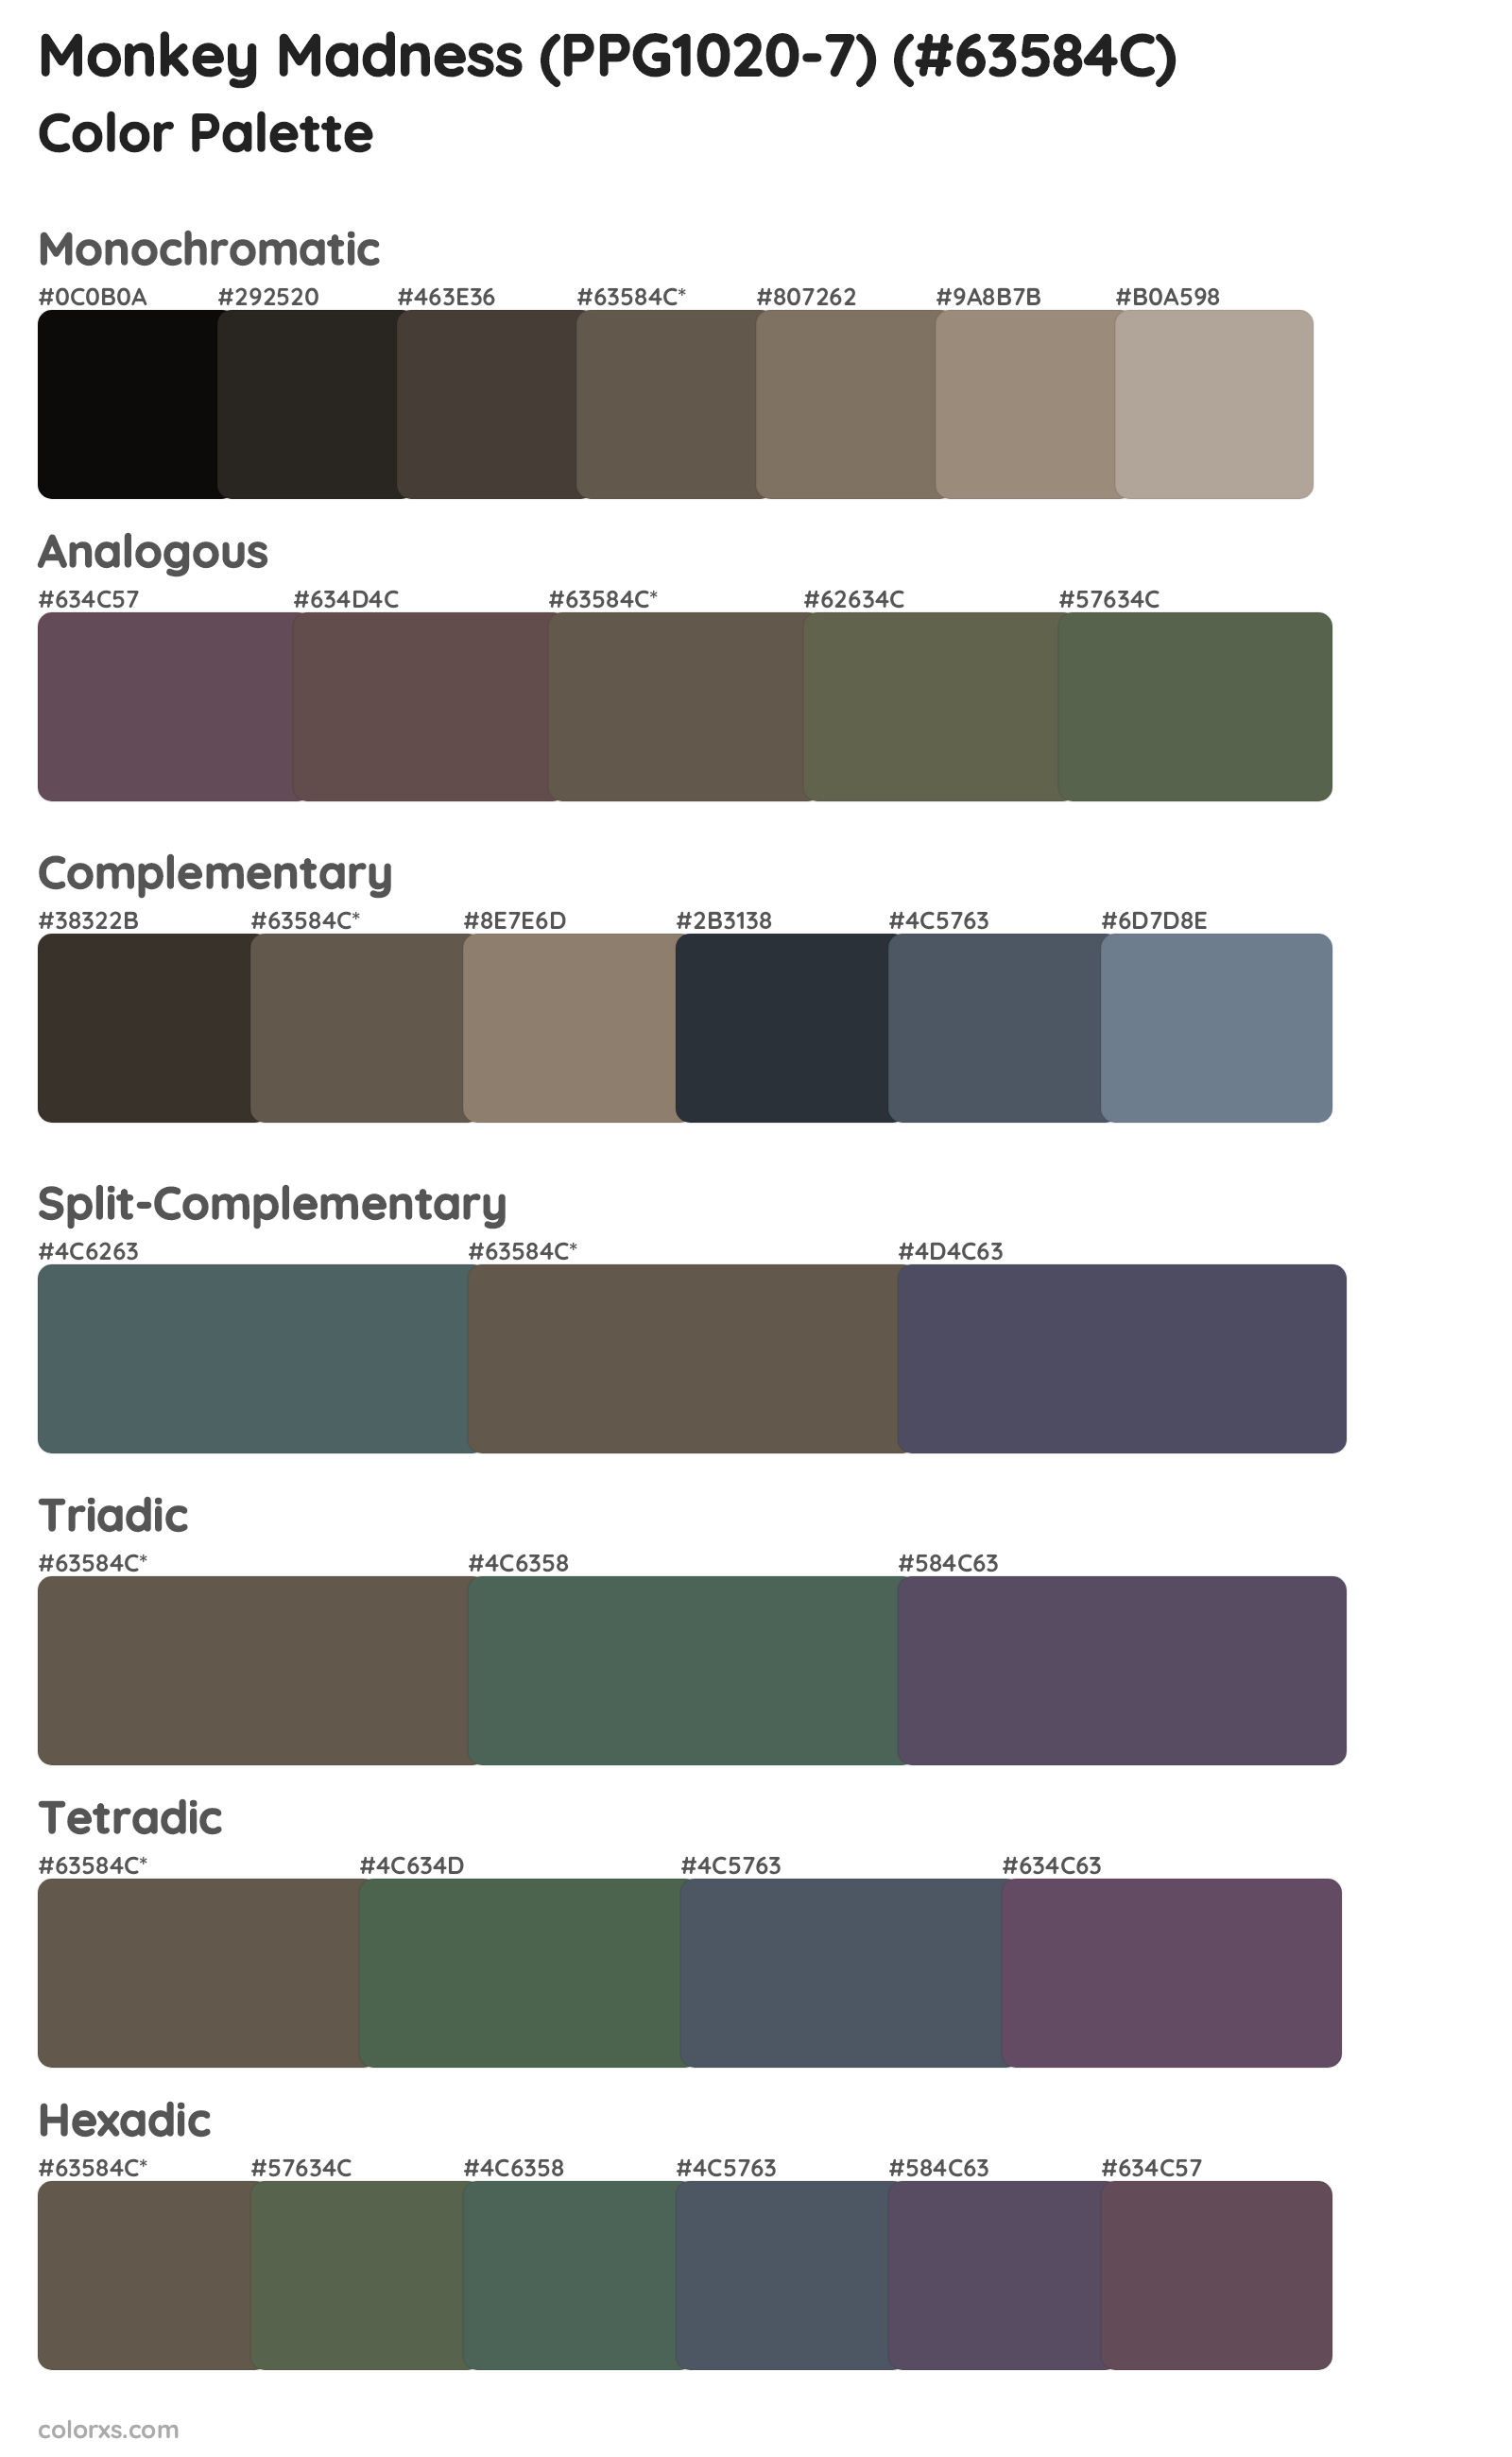 Monkey Madness (PPG1020-7) Color Scheme Palettes